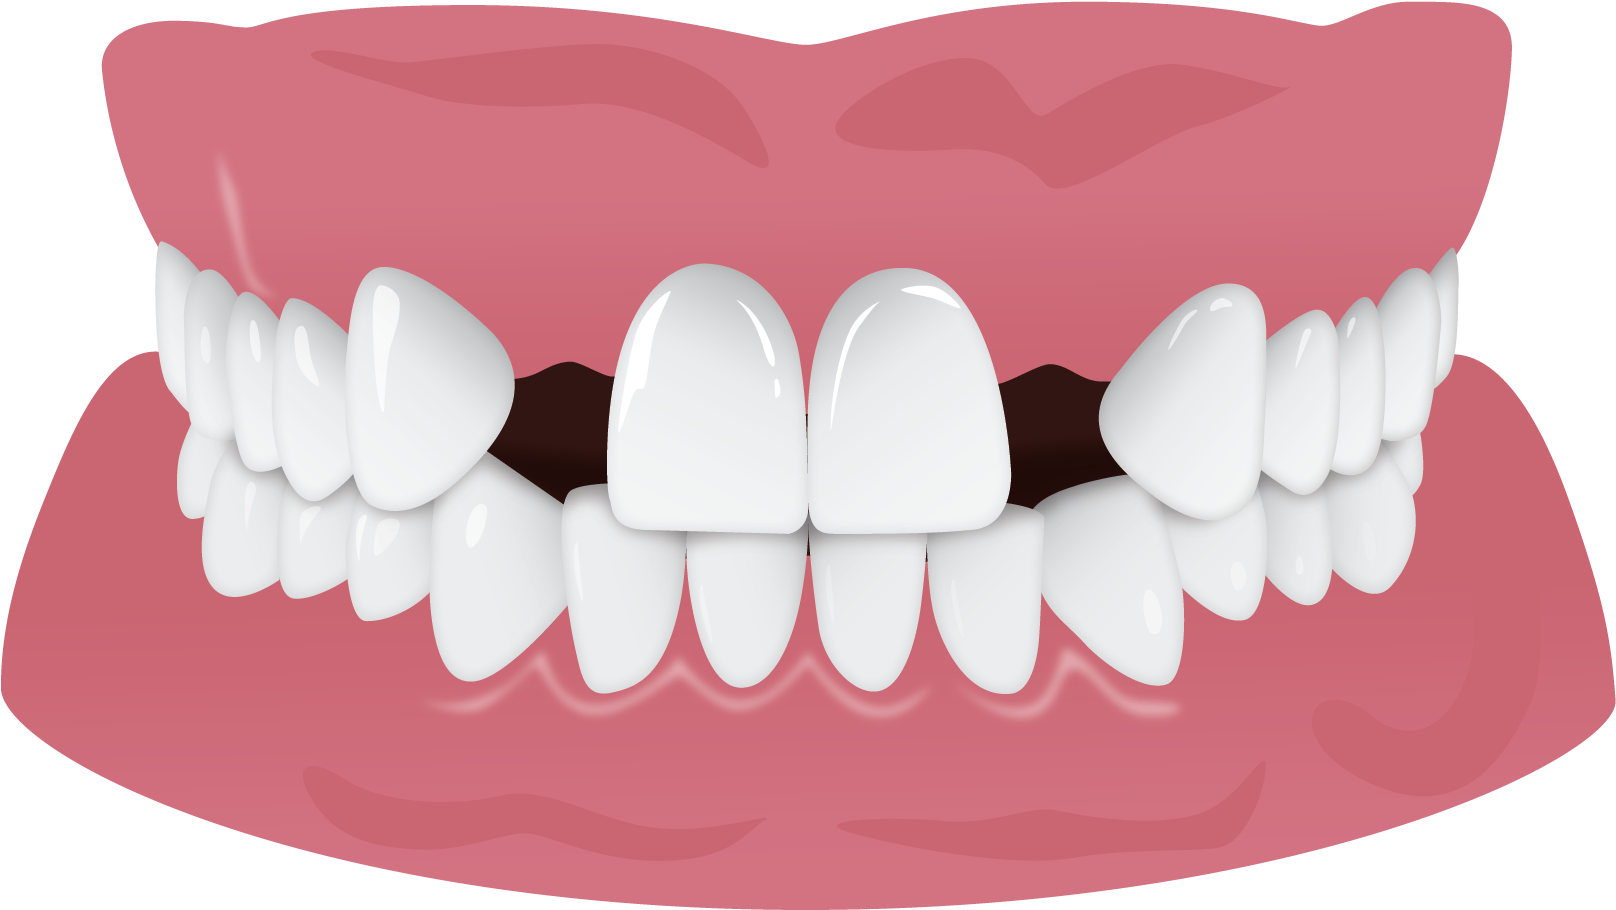 Healthy Teeth Illustration.png